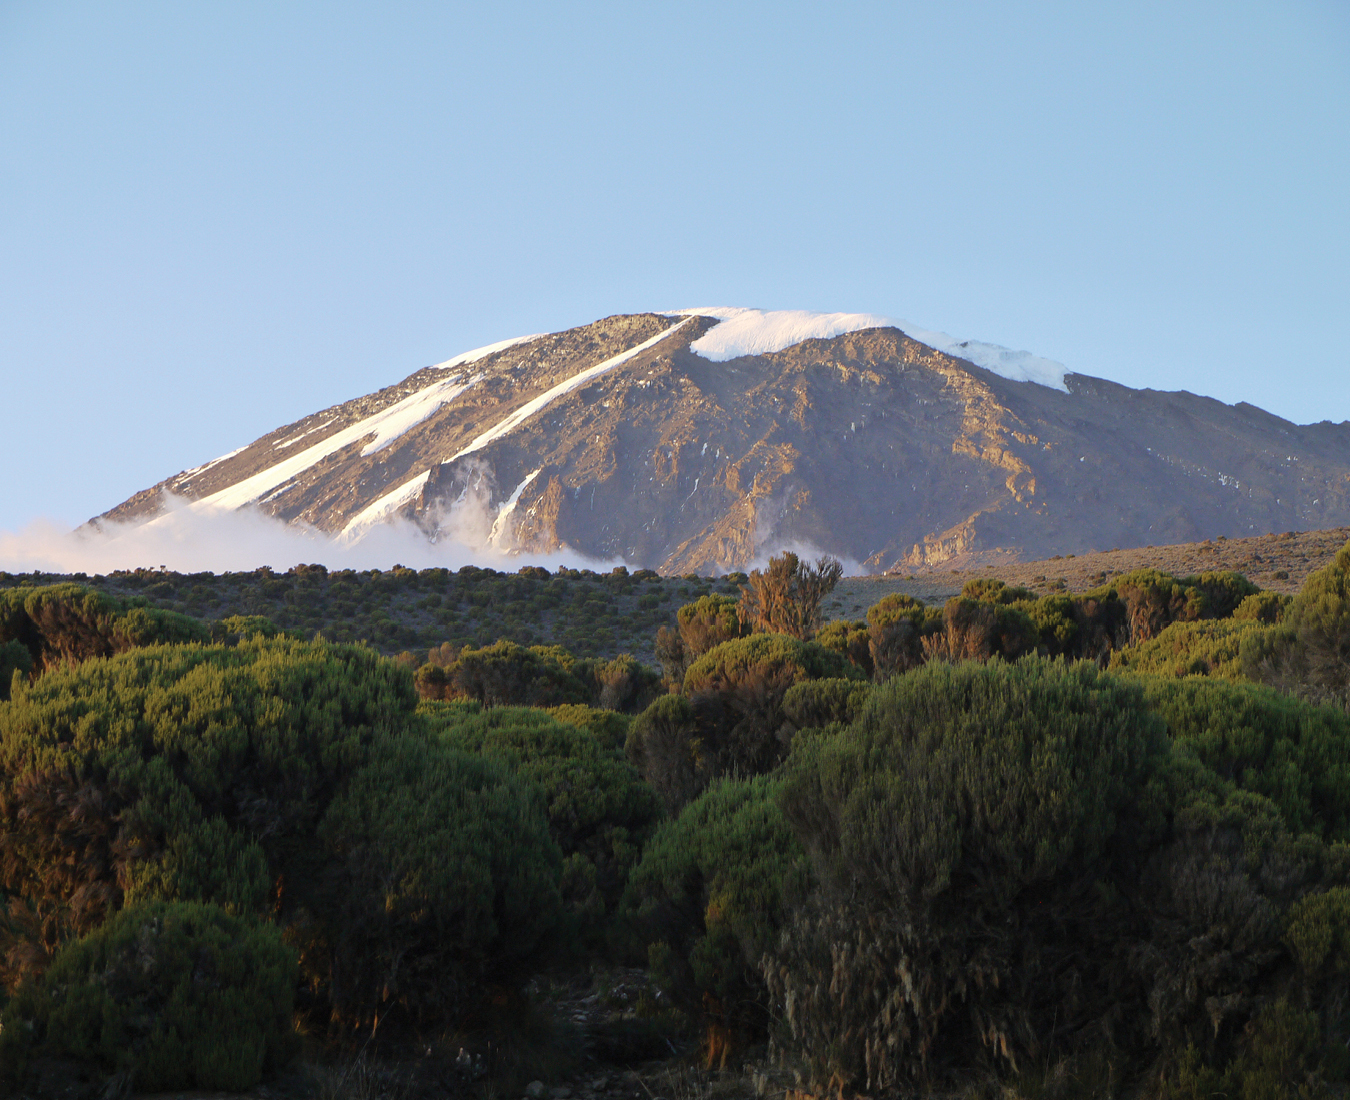 Looking across dense vegetation towards the summit of Mount Kilimanjaro.